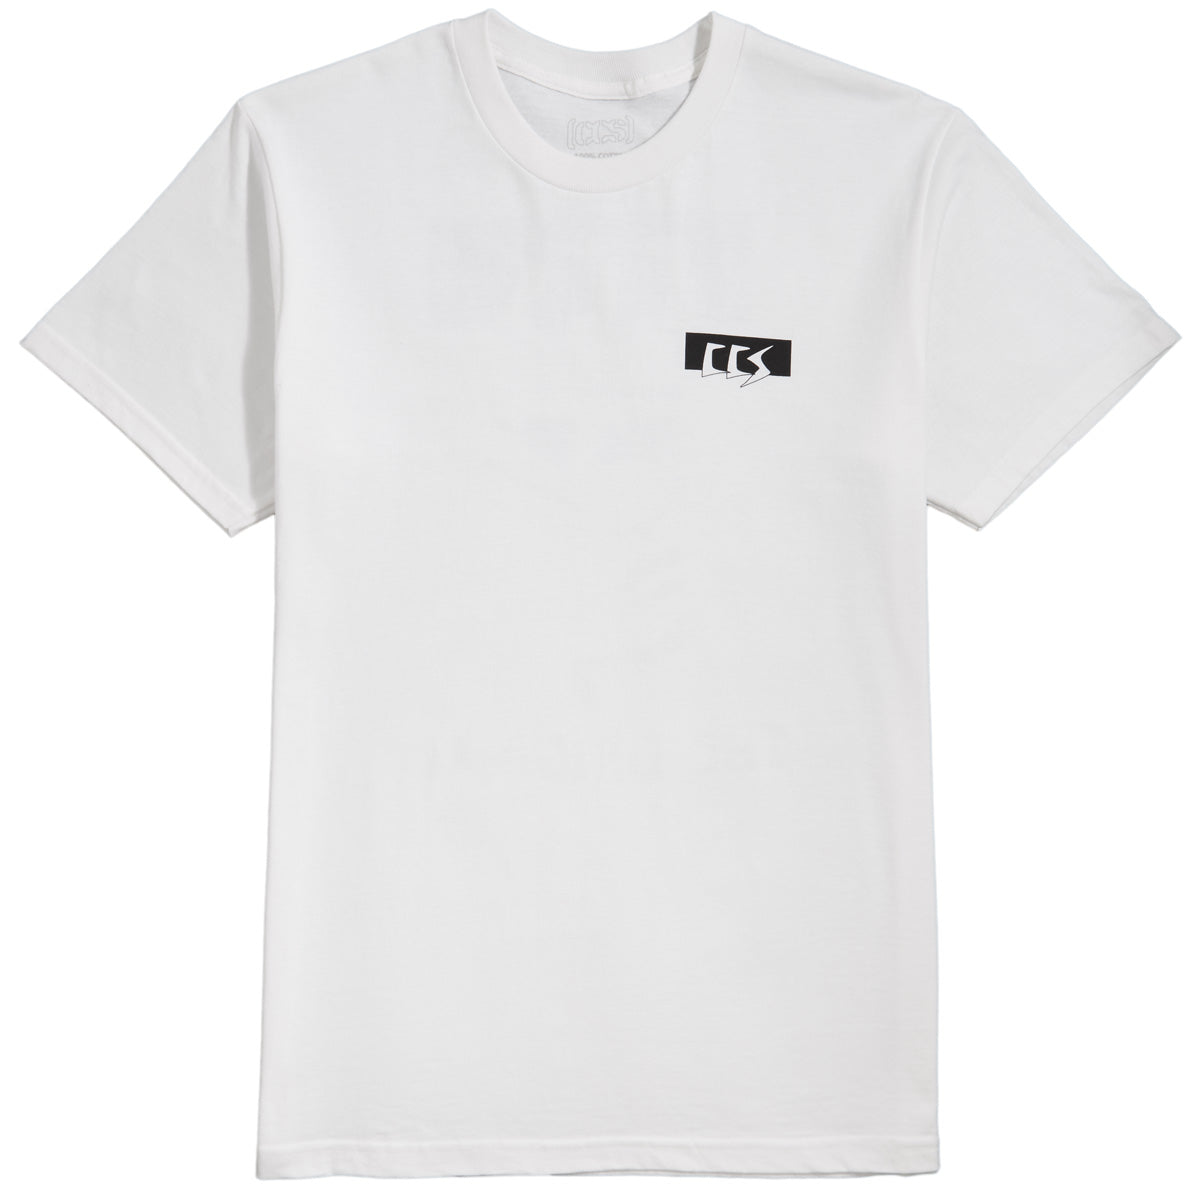 CCS OG Face T-Shirt - White/Reflective Black image 2